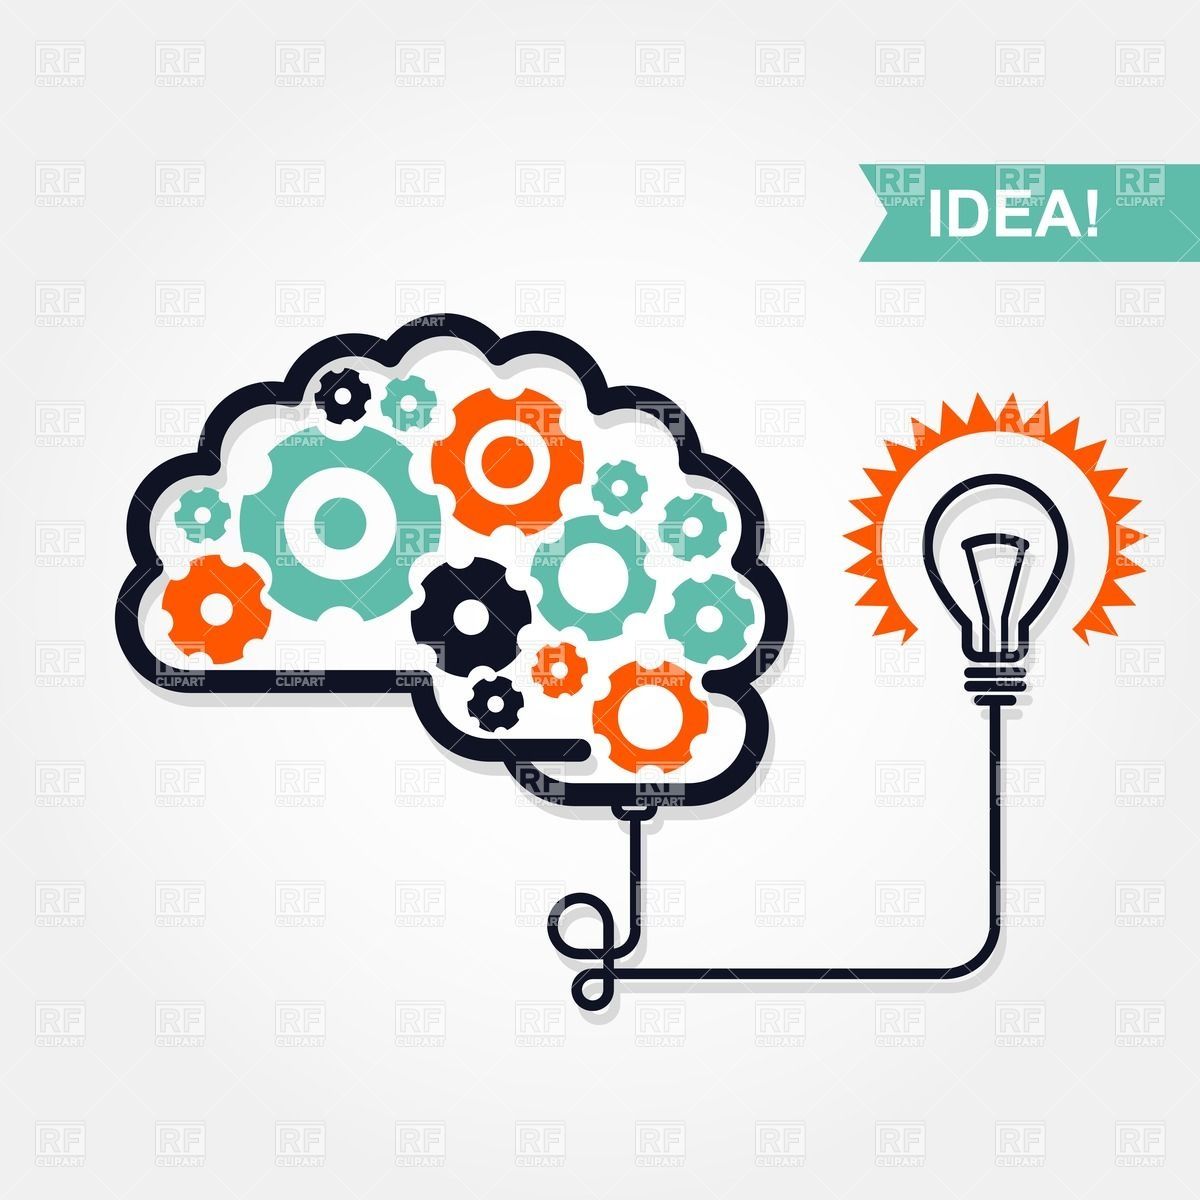 Business idea or invention icon